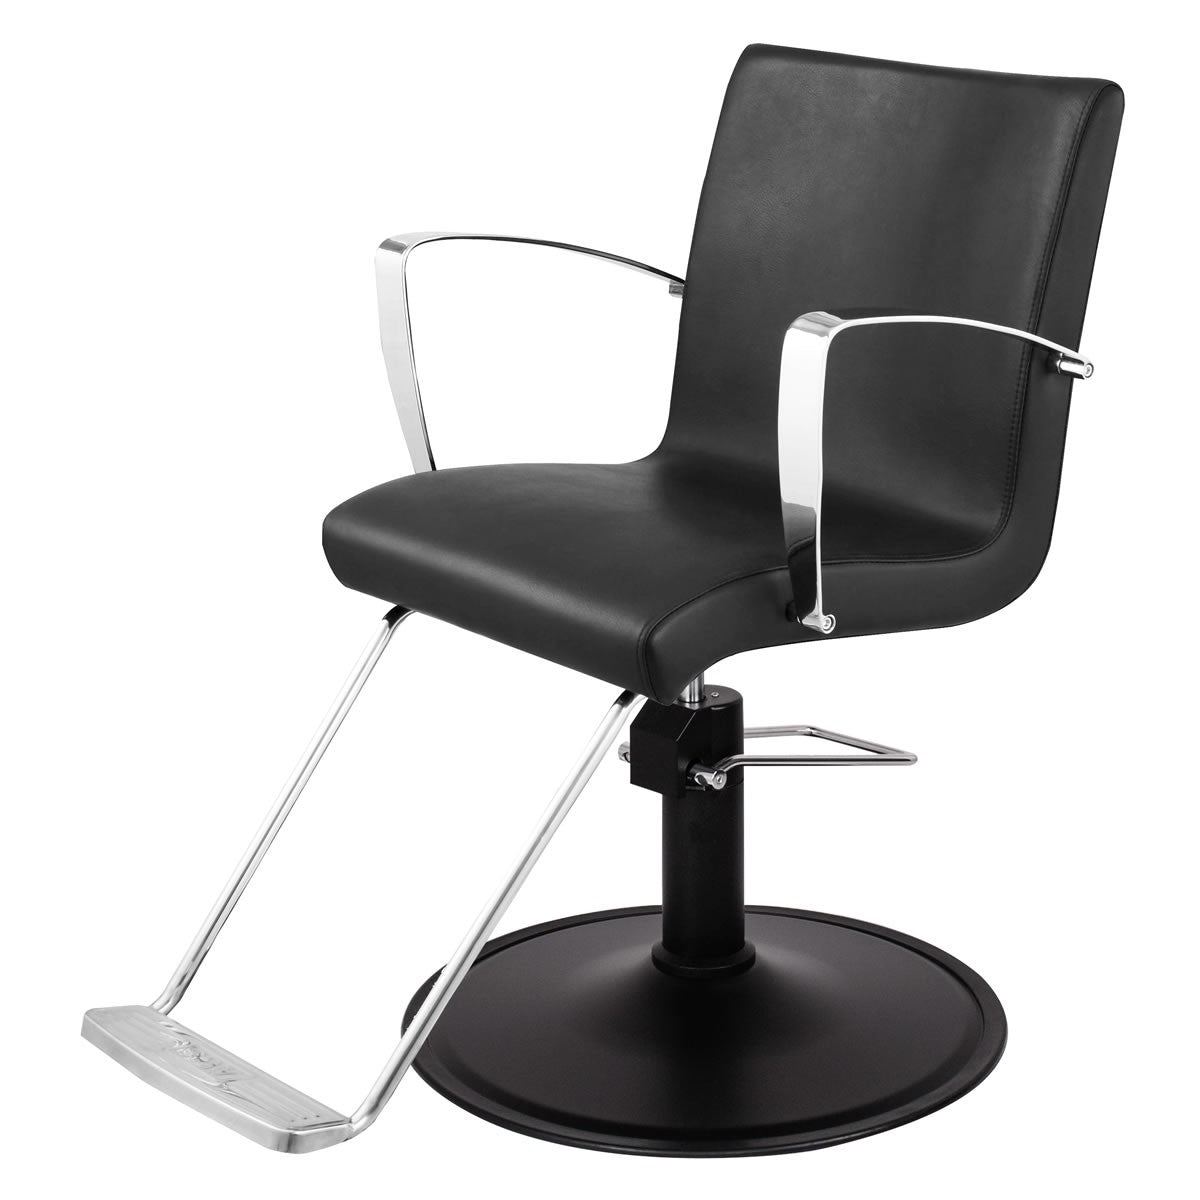 SALLY Salon Styling Chair